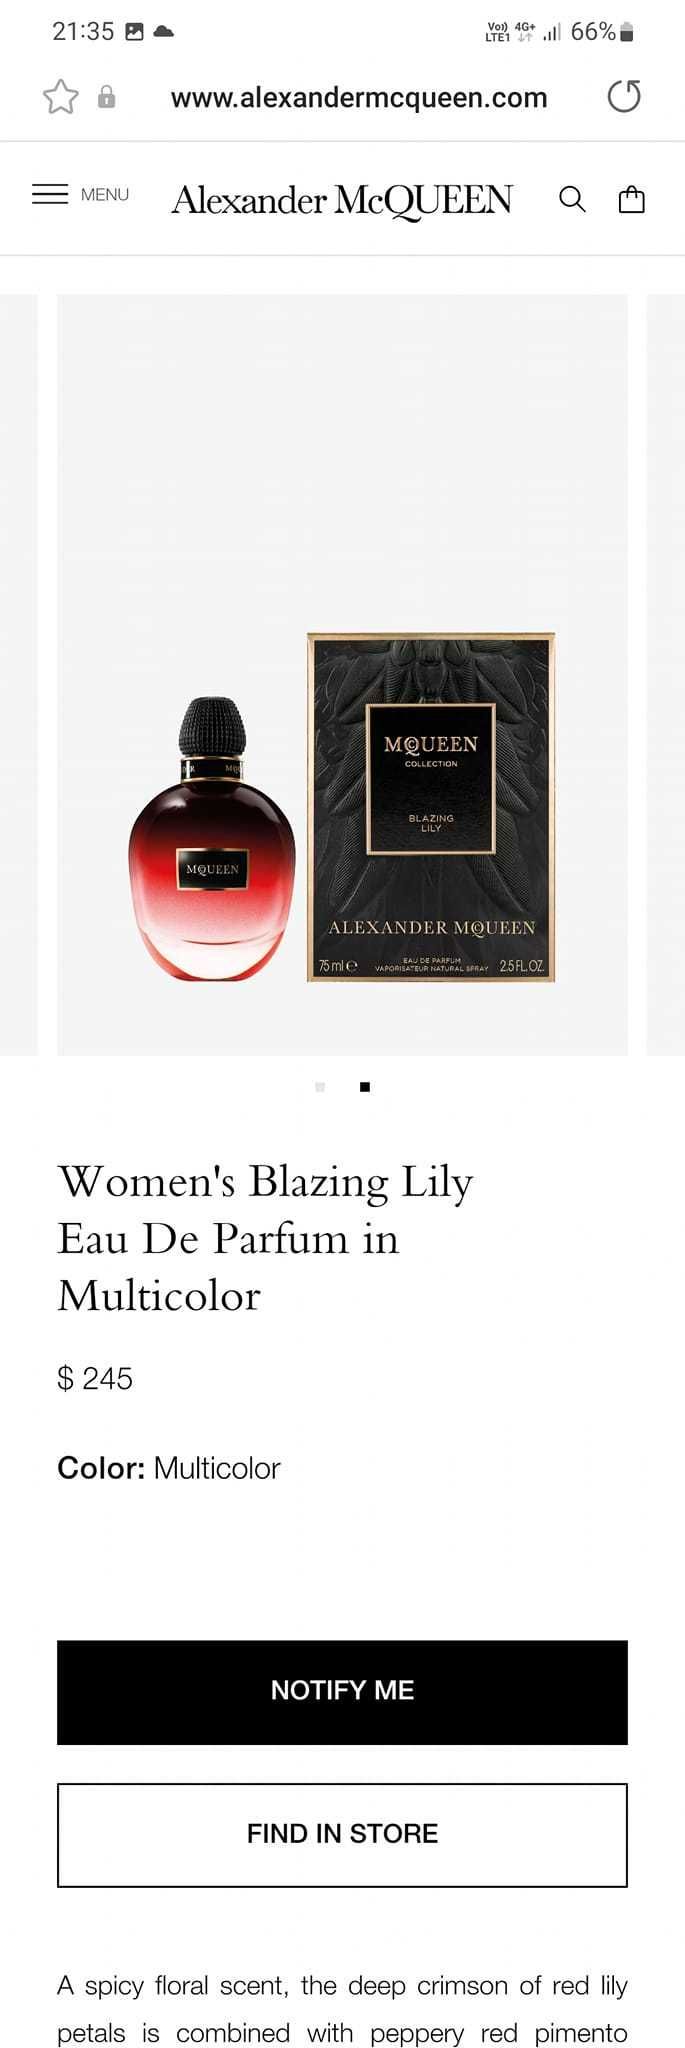 Alexander McQueen Collection : Blazing Lily 75ml Eau de Parfum